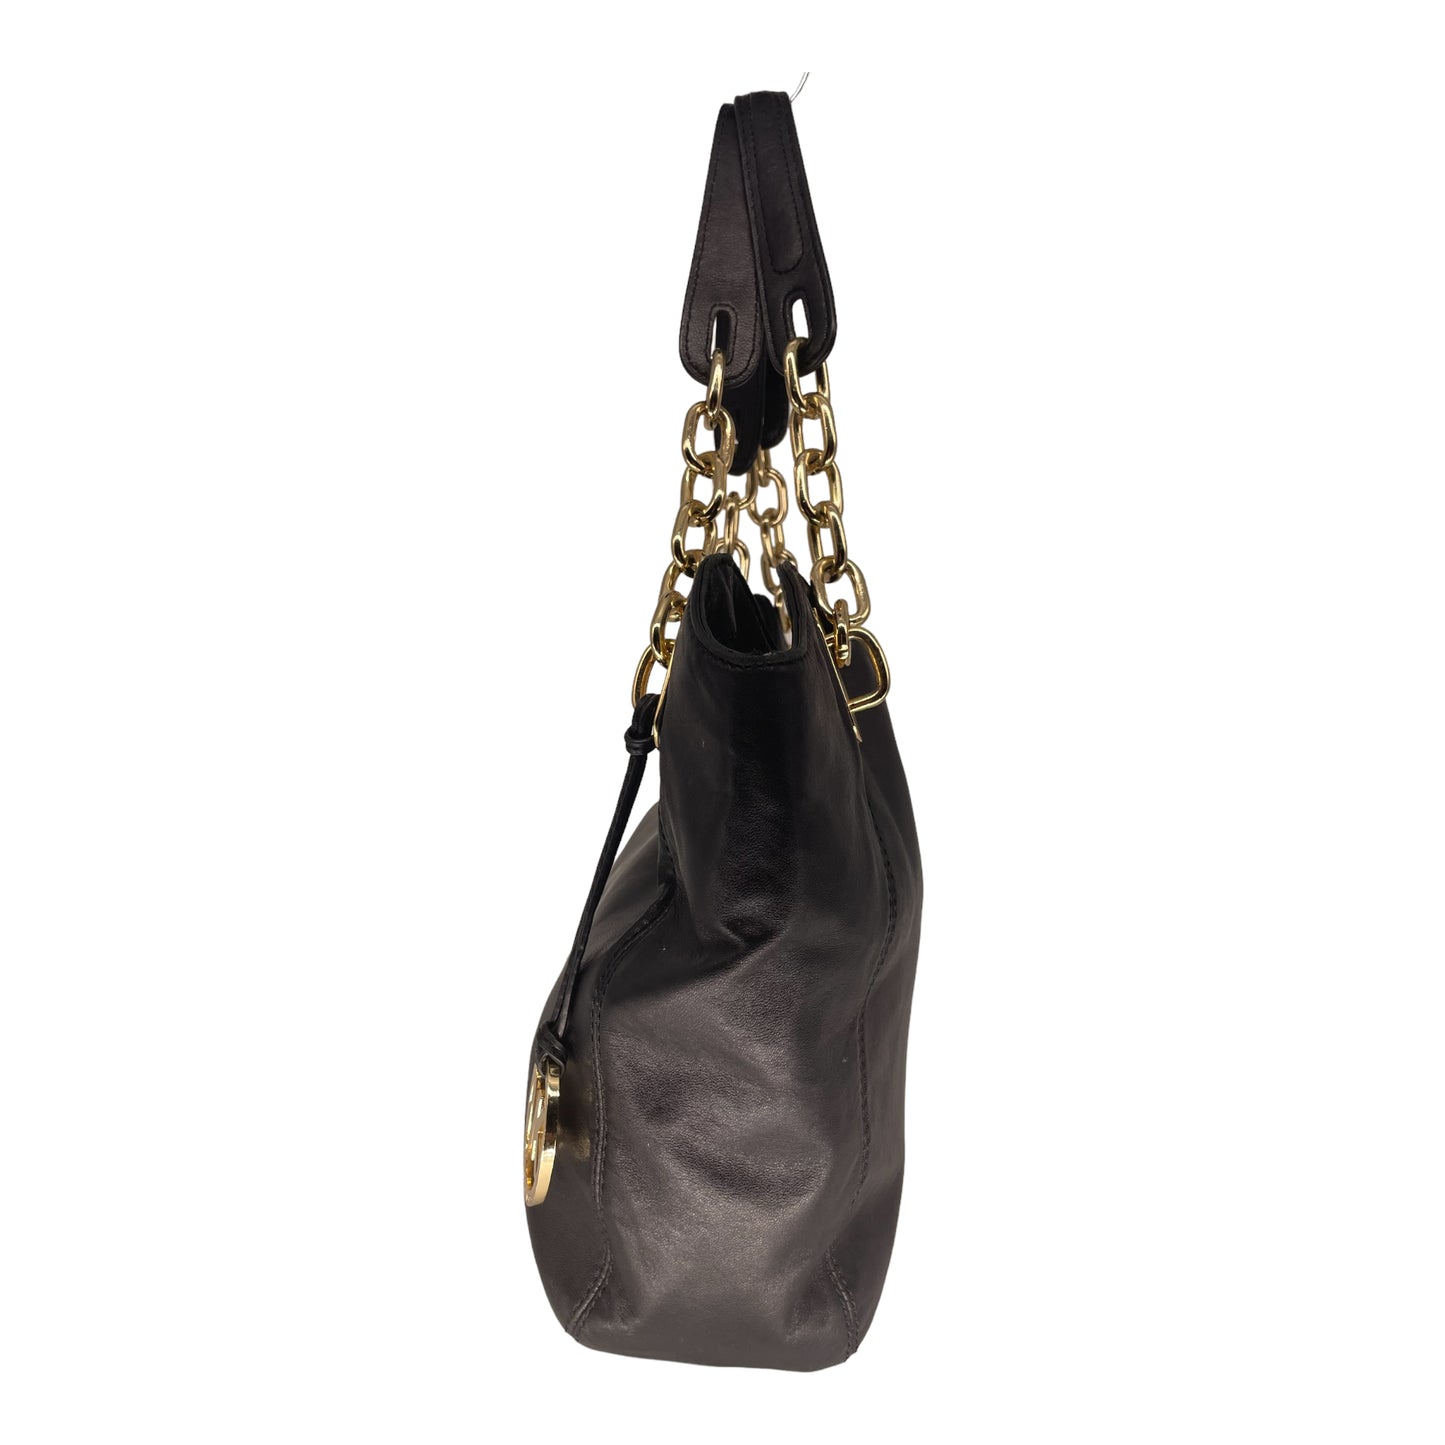 Michael Kors Pebble Shoulder Handbag Black Leather Satchel